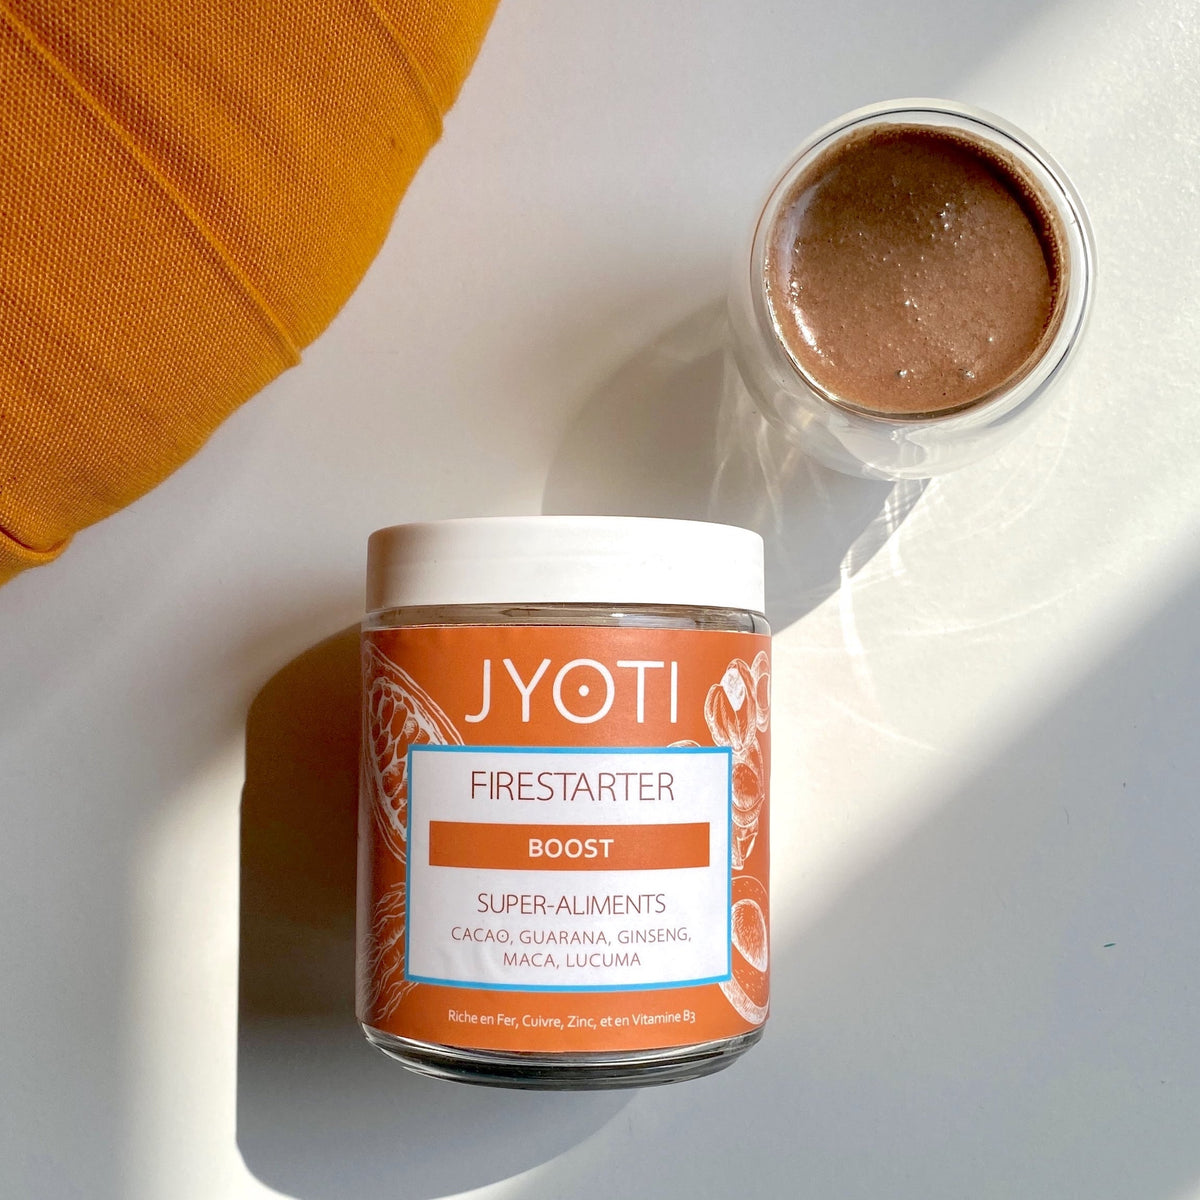 JYOTI Firestarter Mix Superaliments Booster Boisson energisante cacao guarana ginseng